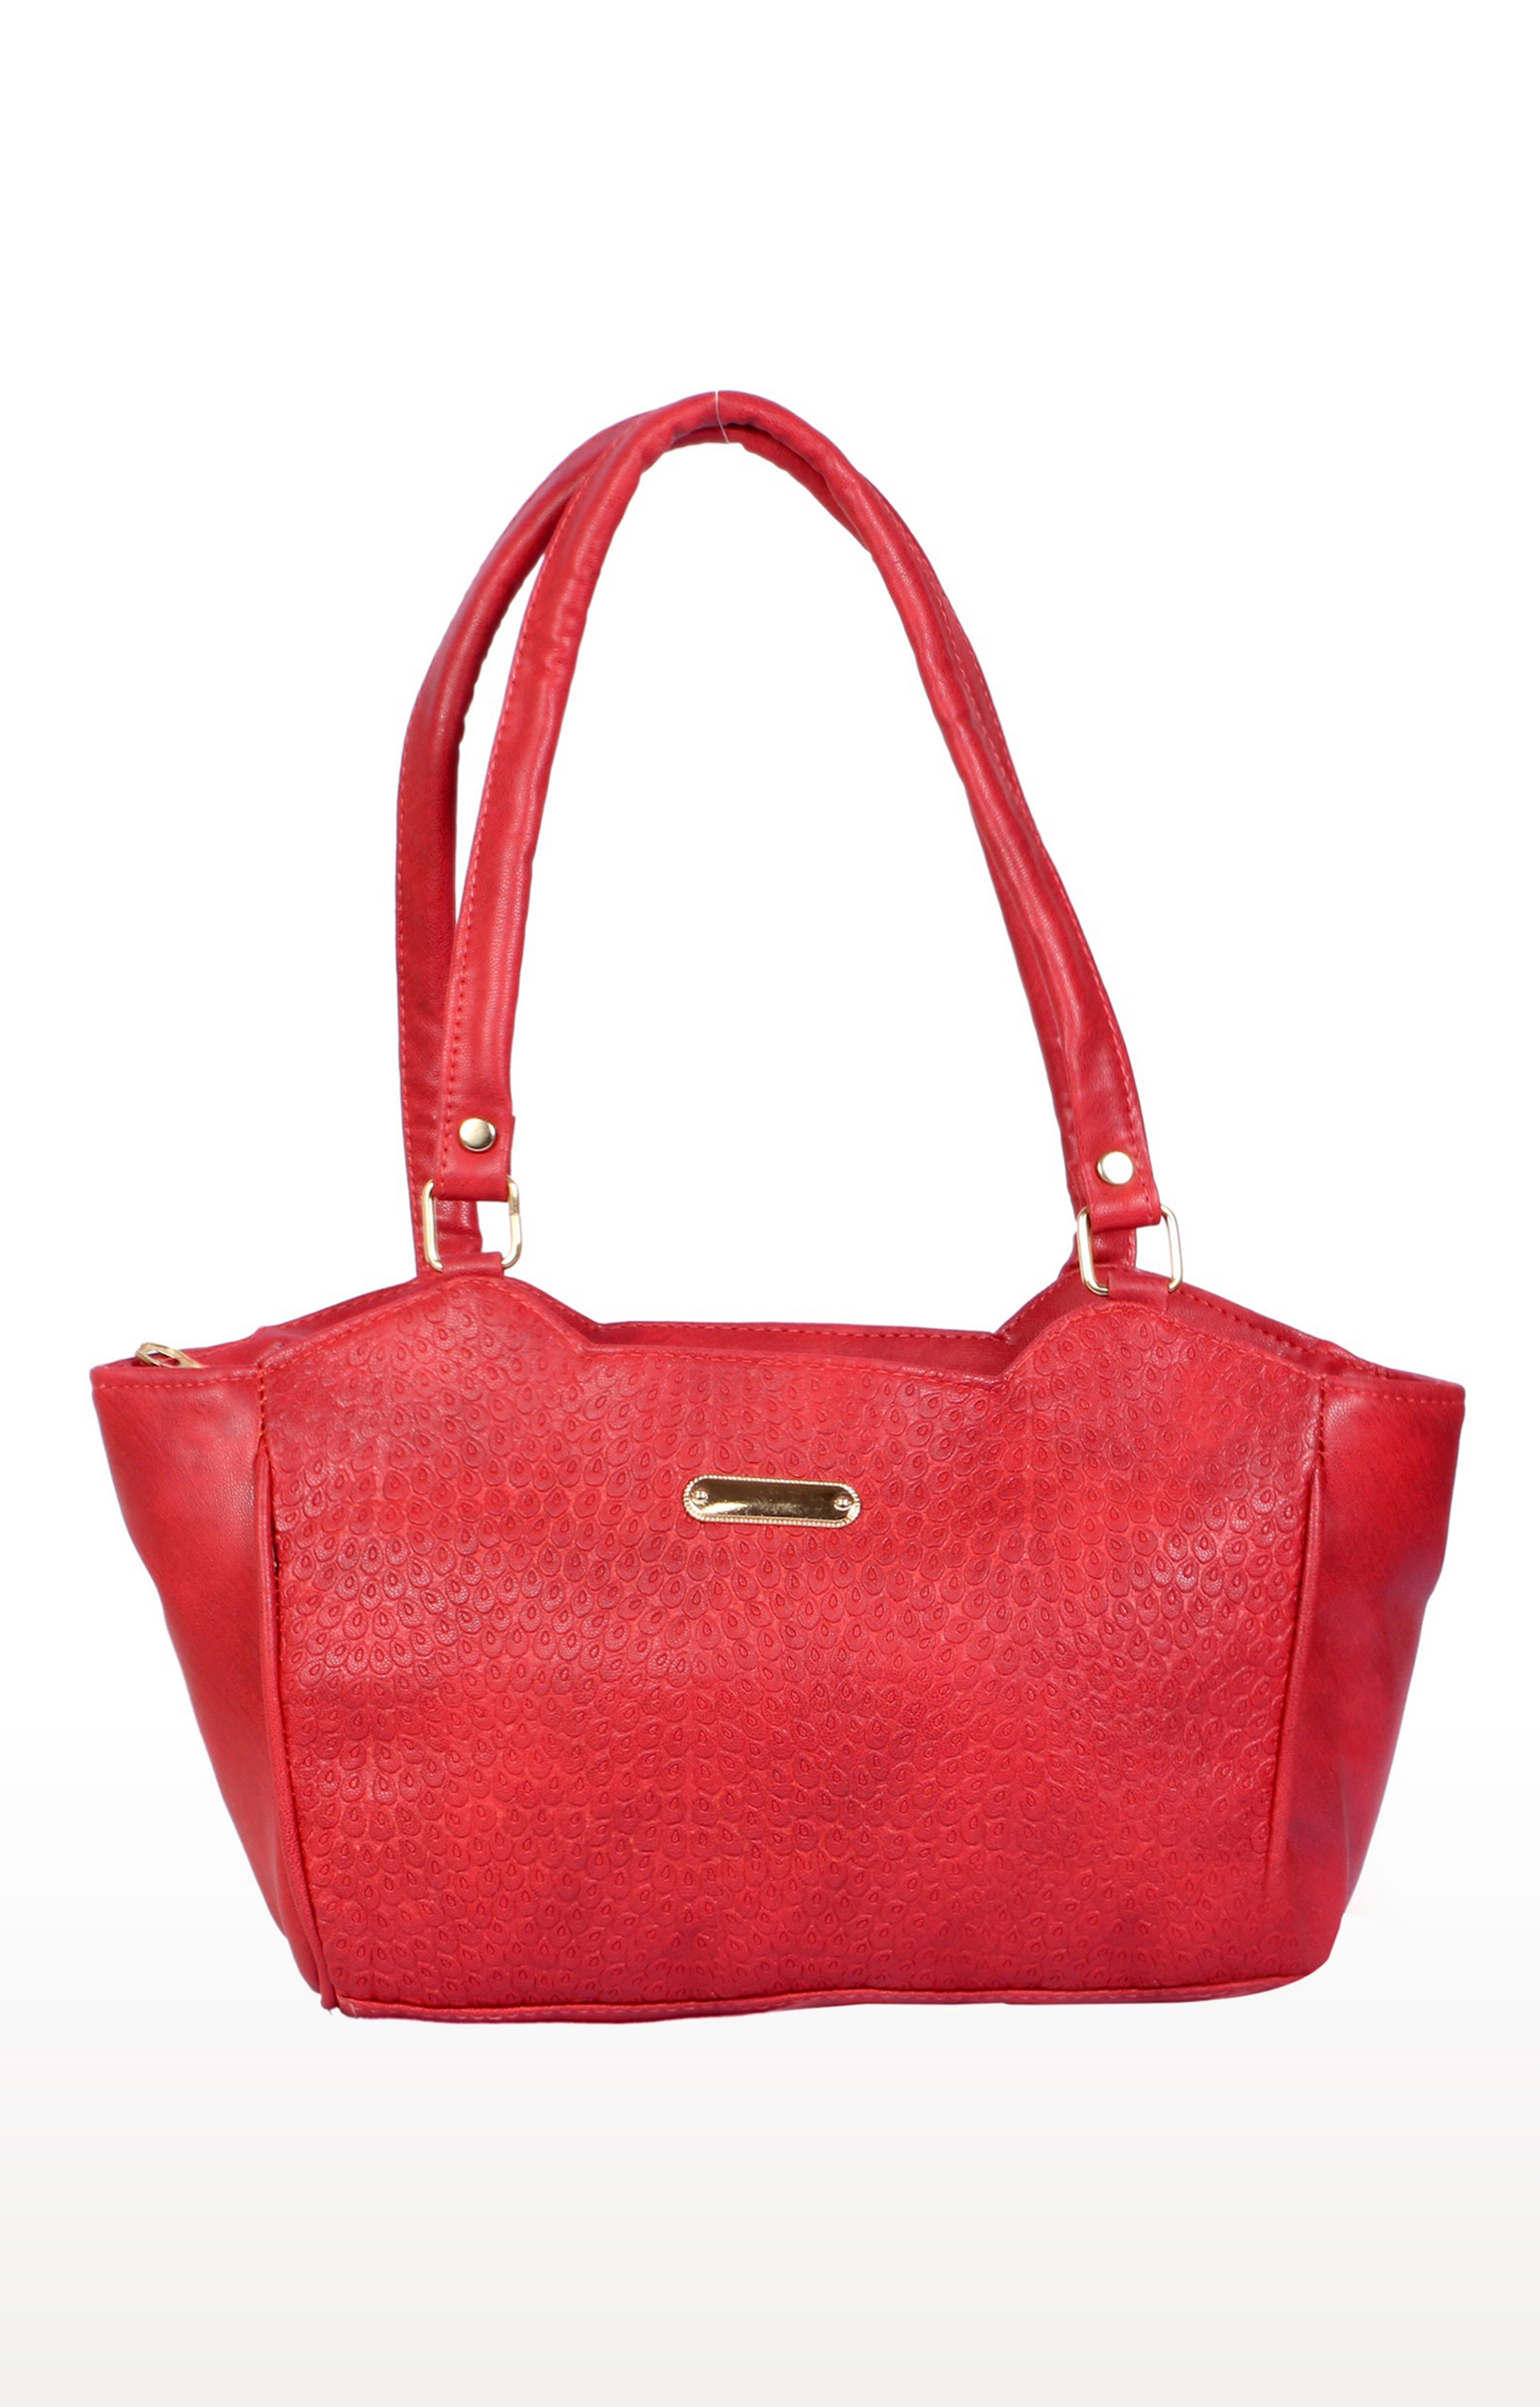 EMM | Lely's Beautiful Women's Handbag With Latest Shades -Pink 0